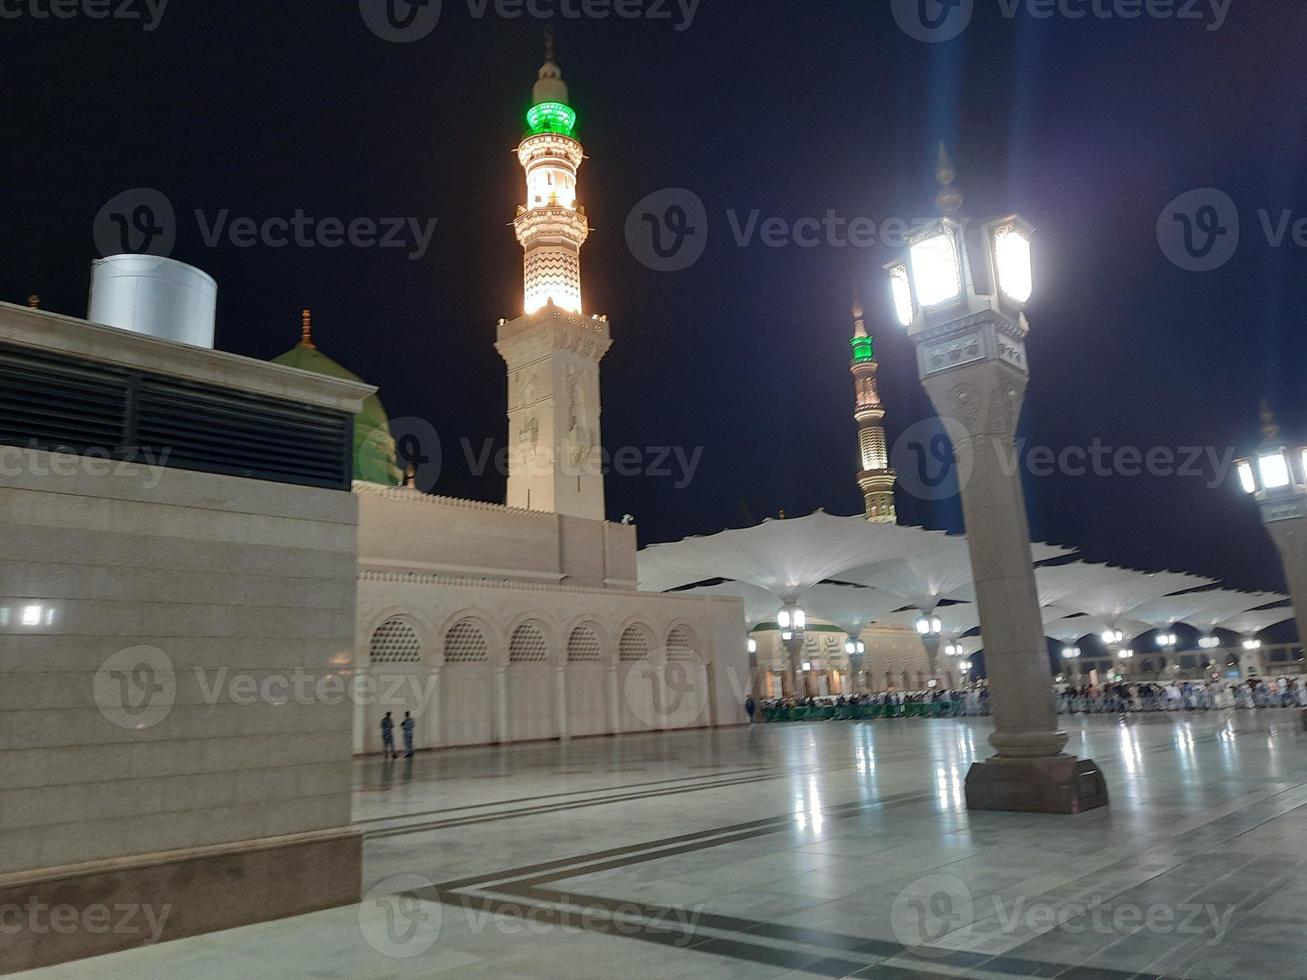 mooi visie van masjid al-nabawi, medina, saudi Arabië in nachtlichten. foto